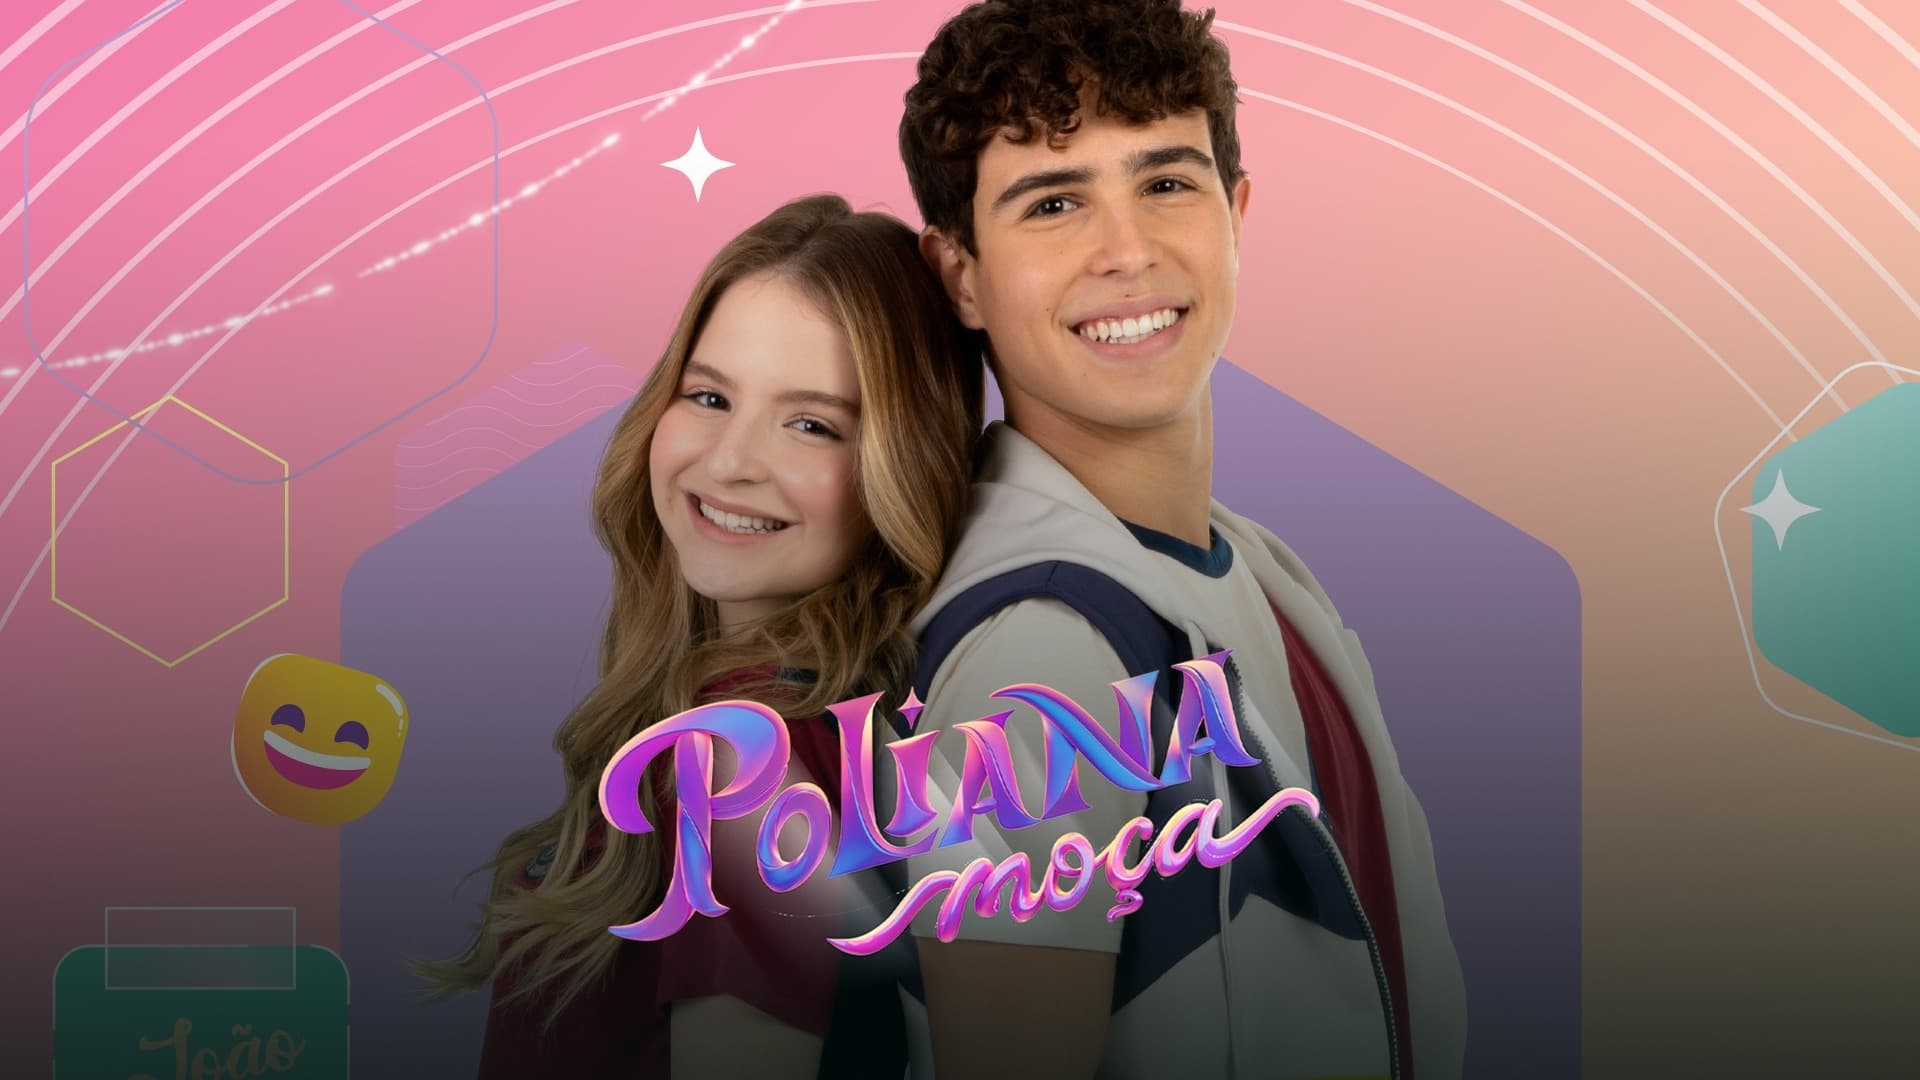 Poliana Moça - Season 1 Episode 45 : Episode 45